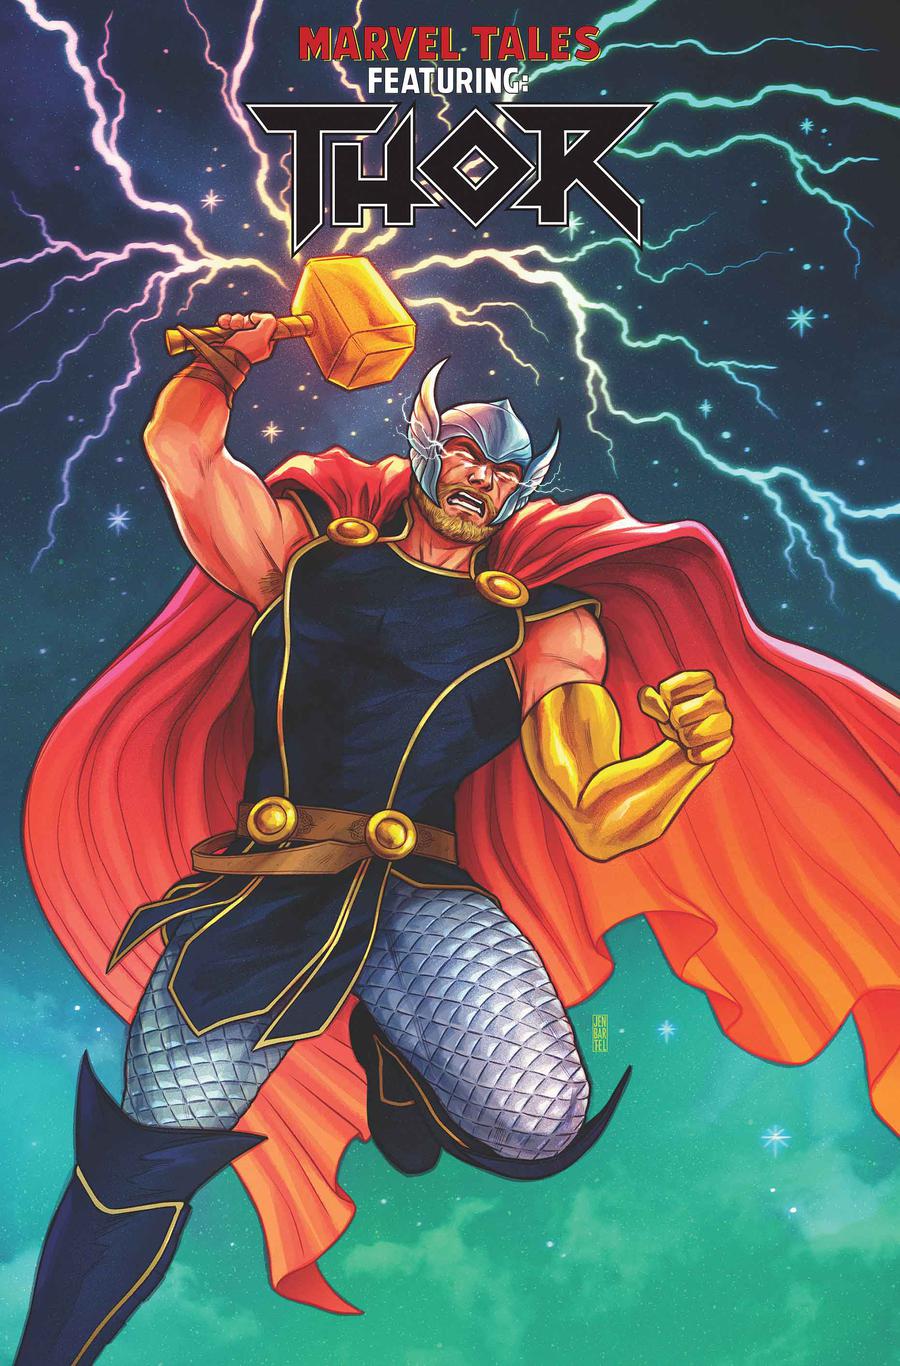 Marvel Tales: Thor no. 1 (2019)